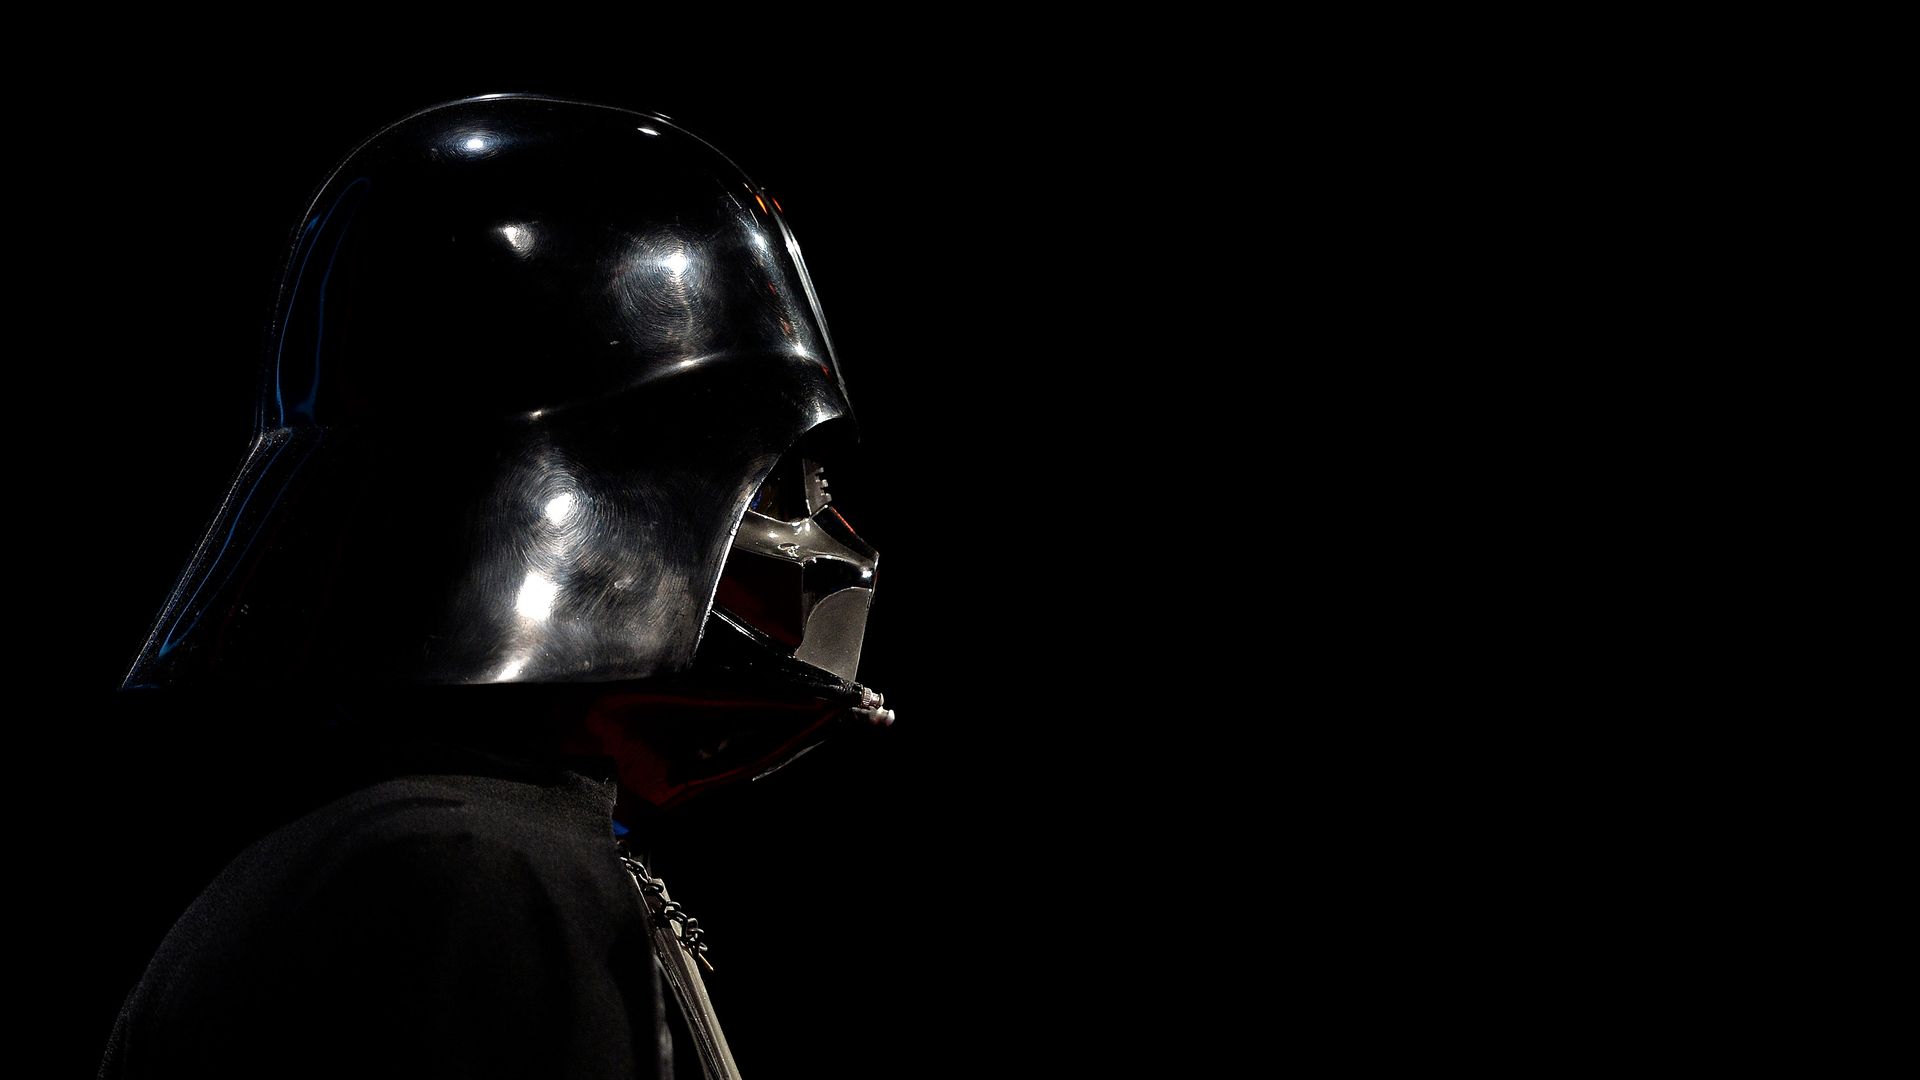 A profile view of Darth Vader